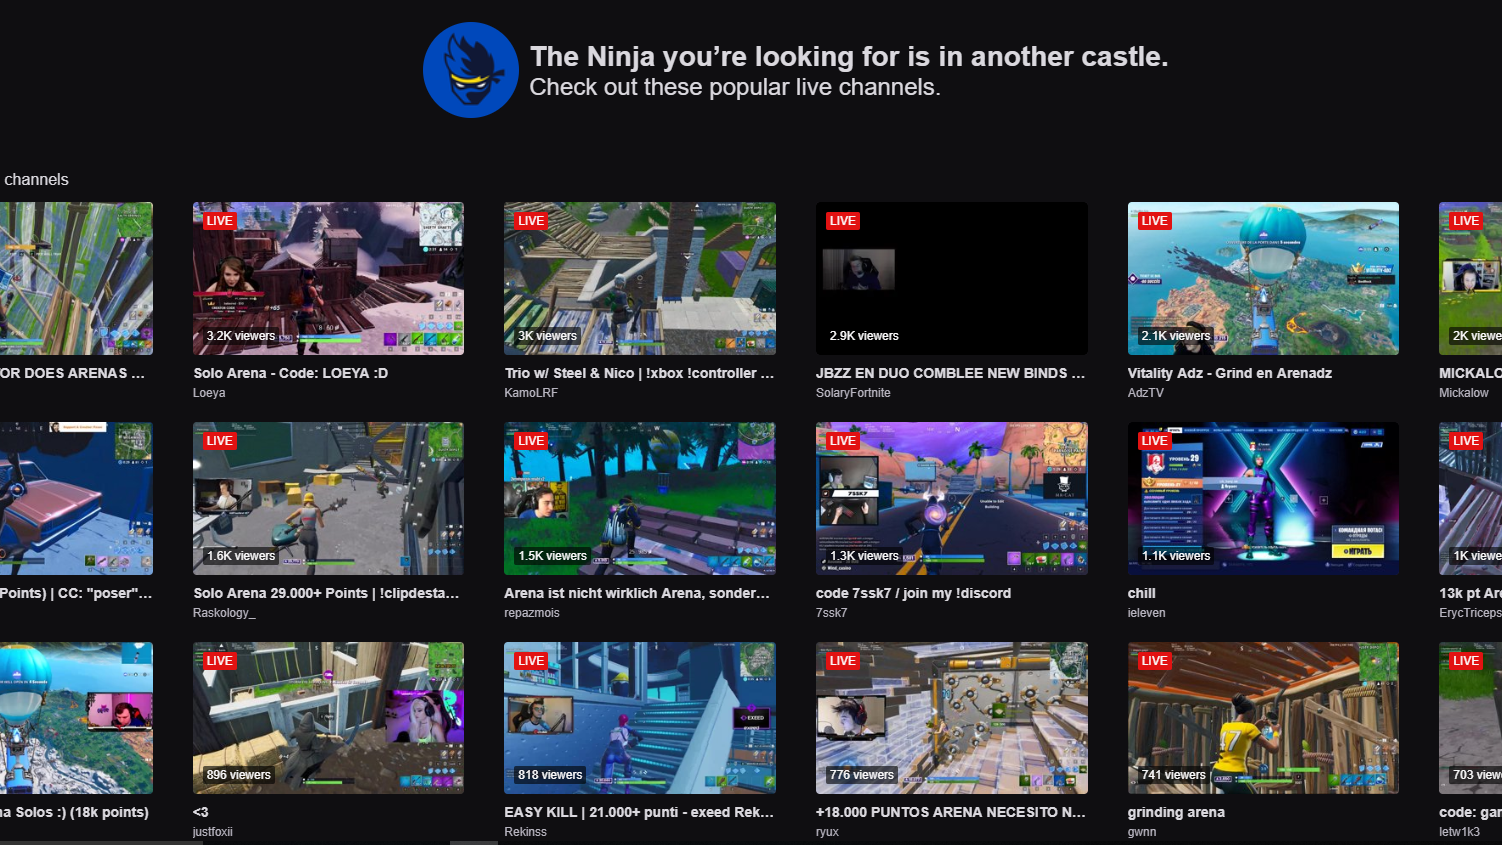 https://d.newsweek.com/en/full/1517260/twitch-ninja-mixer-castle.png